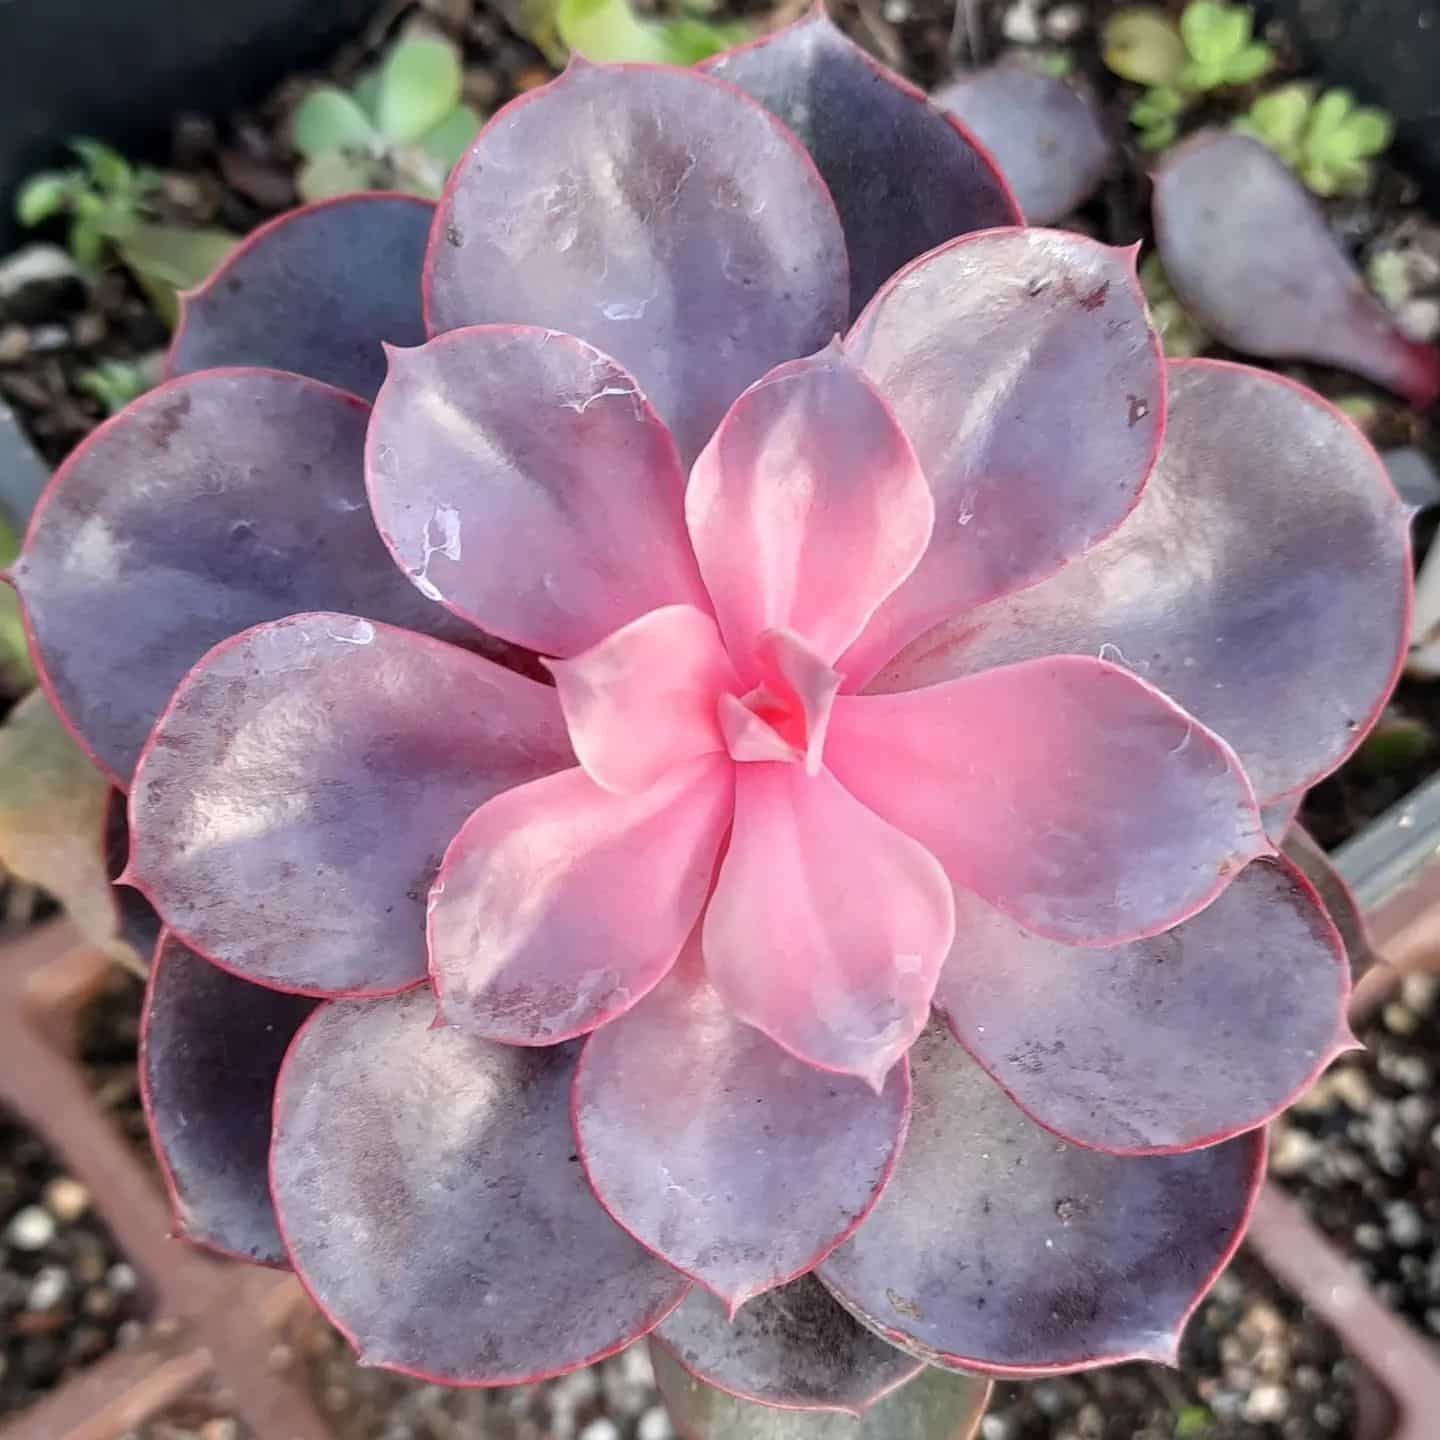 Echeveria Purple Pearl